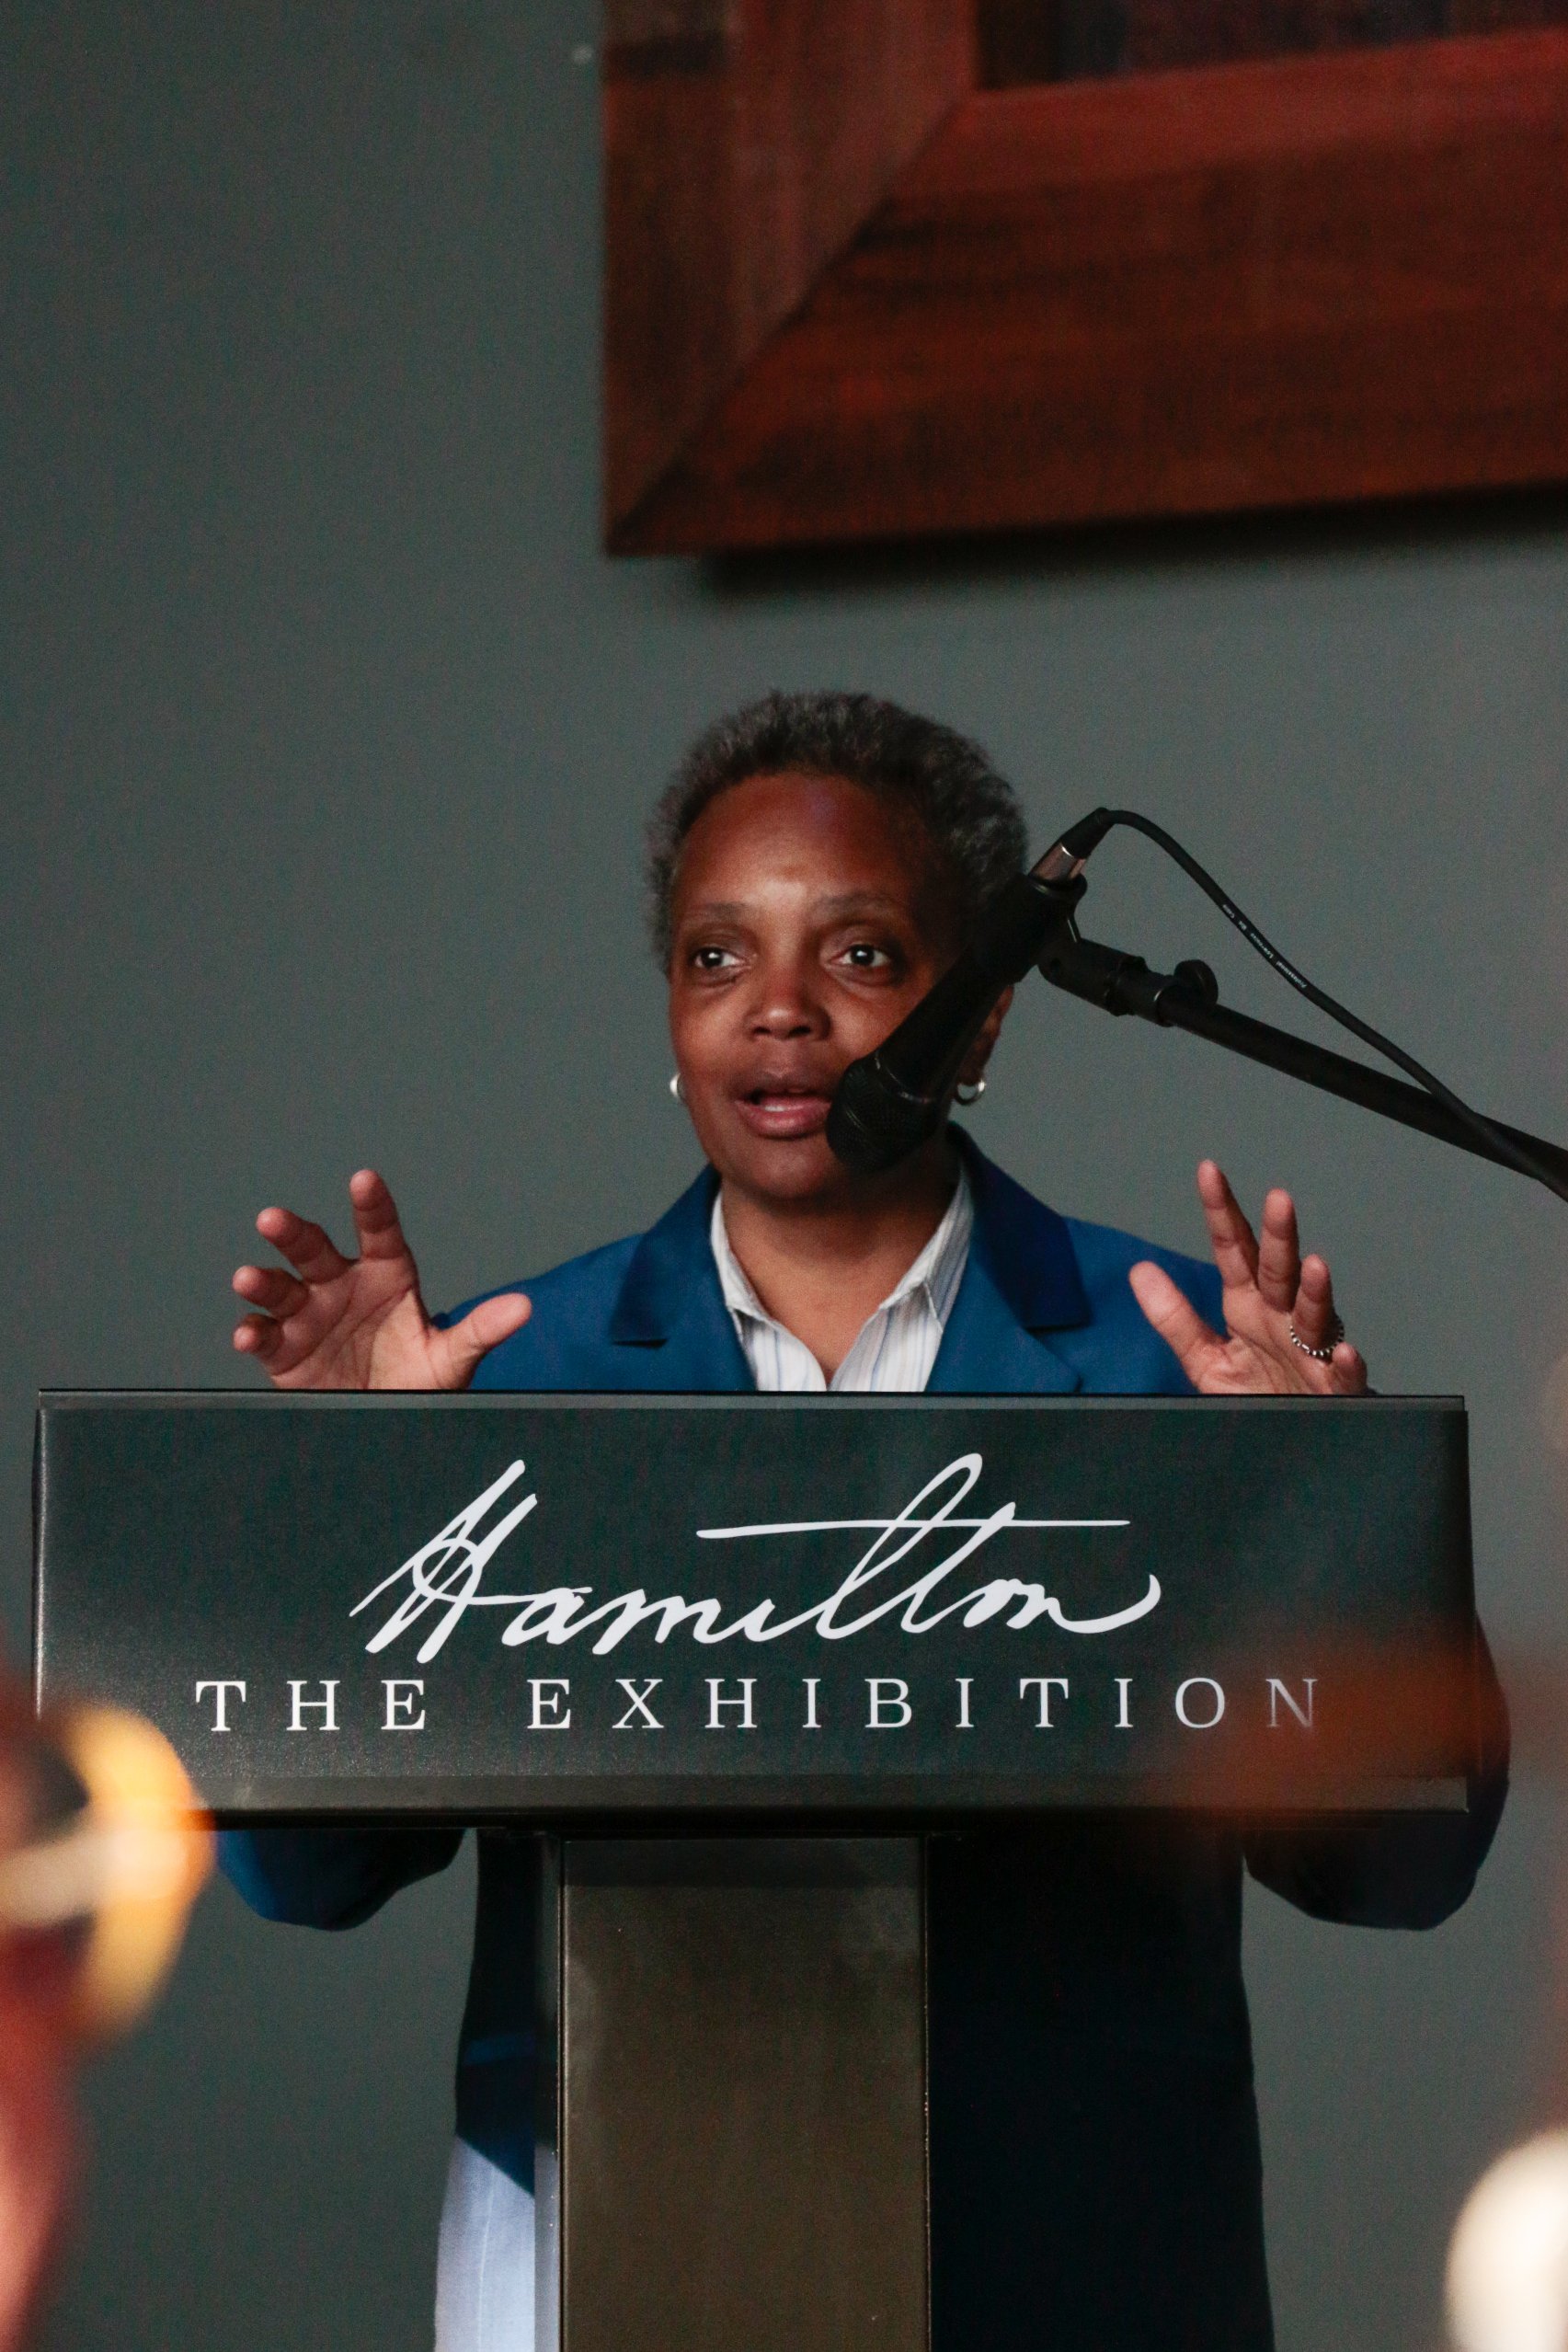 Mayoral Elect Lori Lightfoot at the Hamilton Exhibition Ribbon Cutting, April 26th, 2019. Photo by Mary Crylen..jpeg